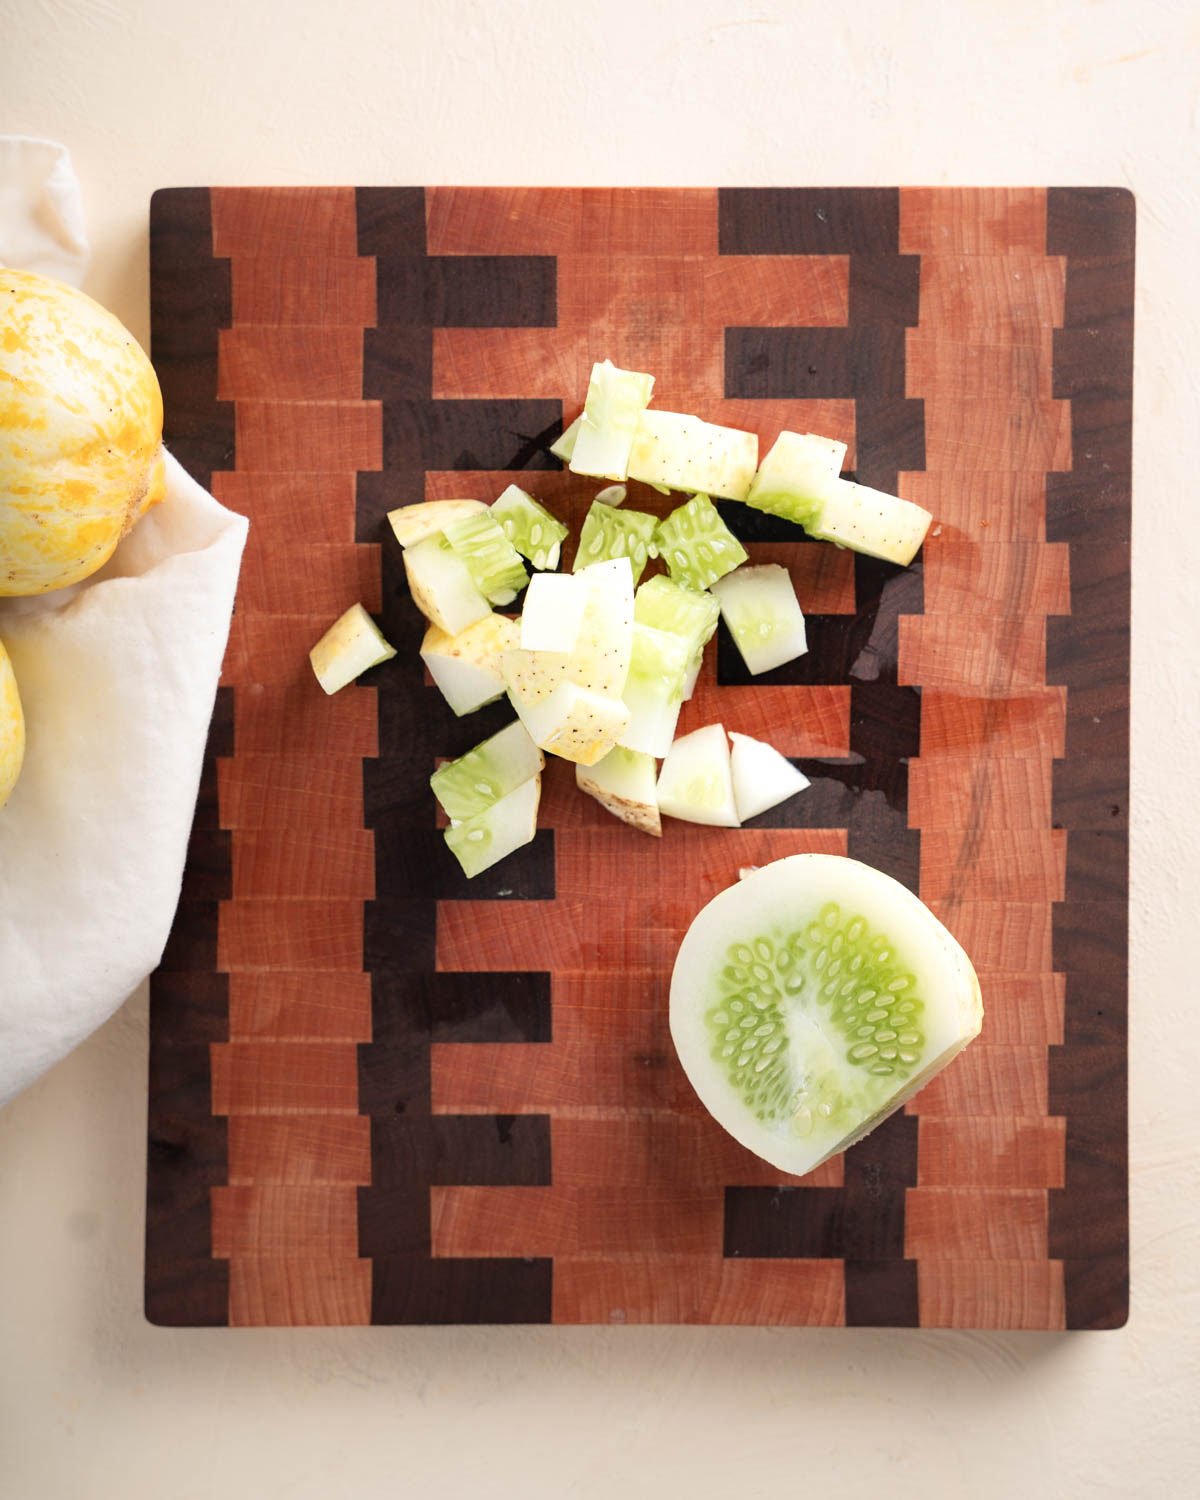 Diced yellow lemon cucumber in a cutting board. 